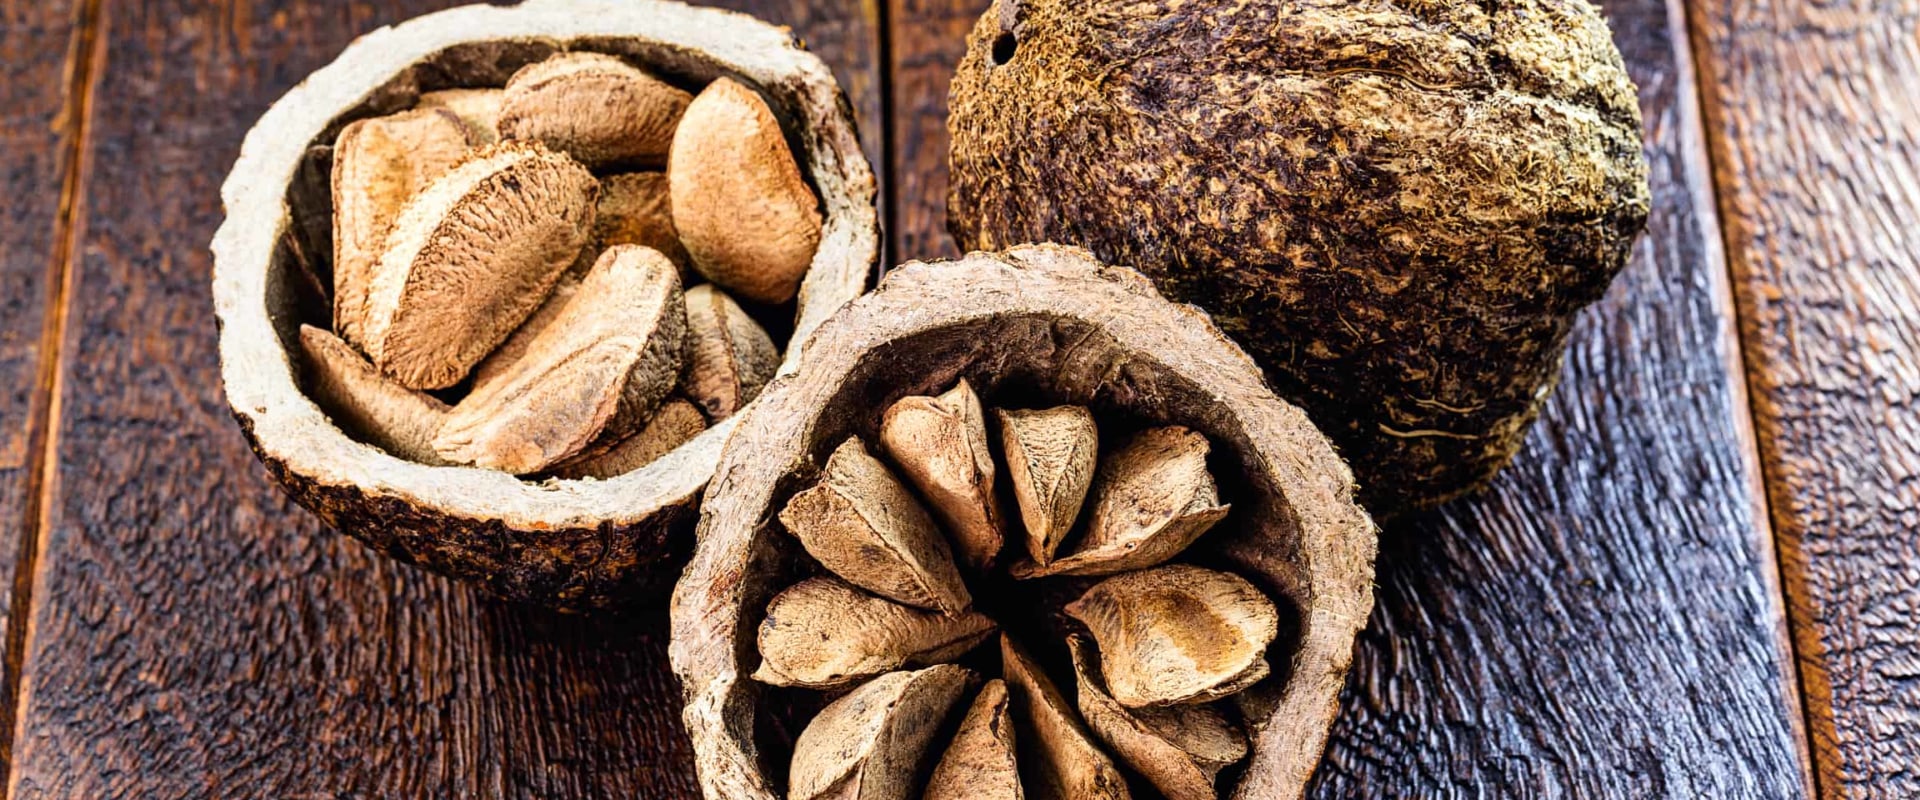 How brazil nuts grow?